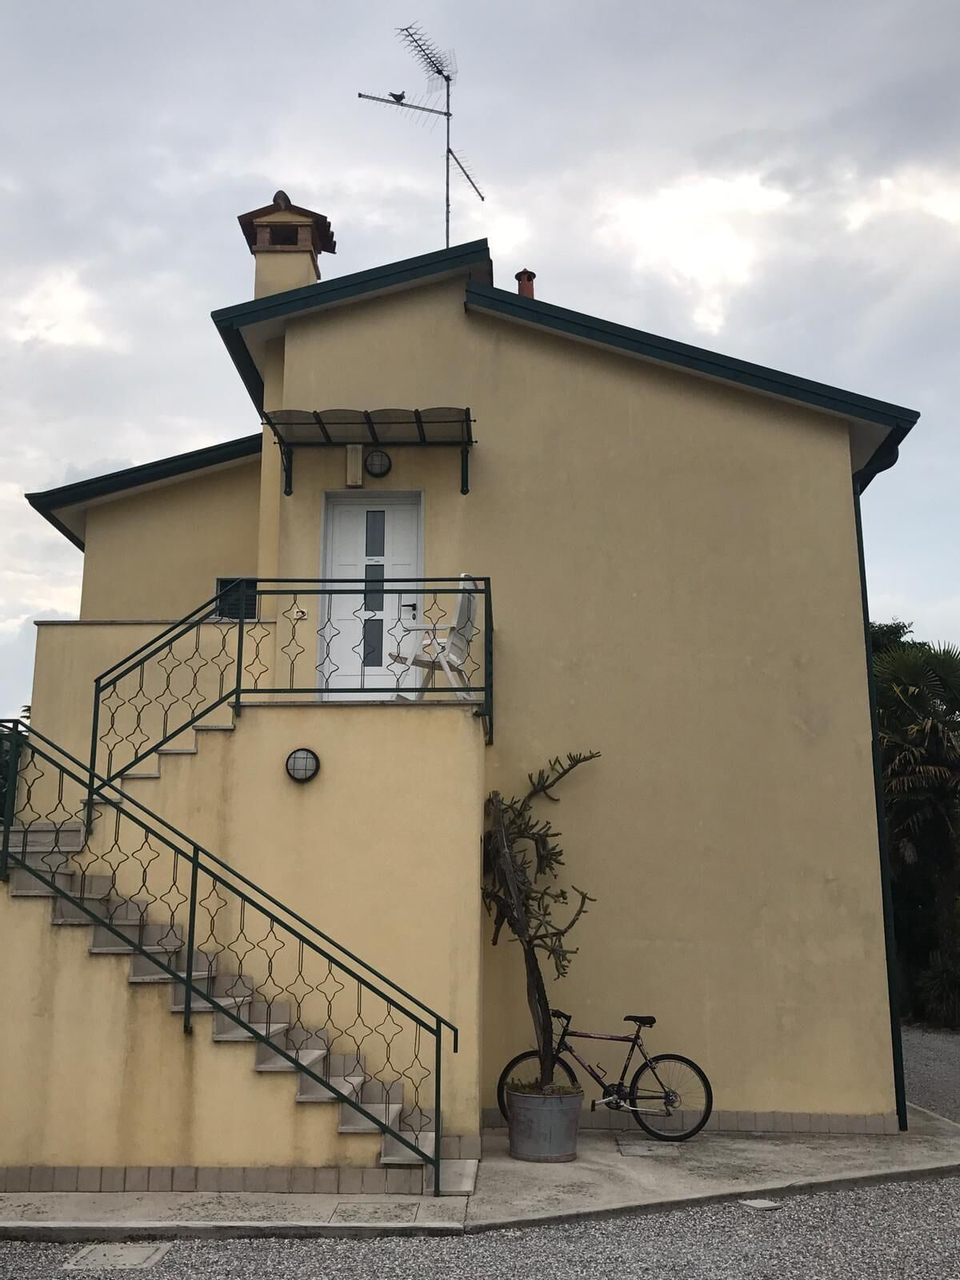 Exterior & Views 1, Affittacamere Fiumicello, Udine